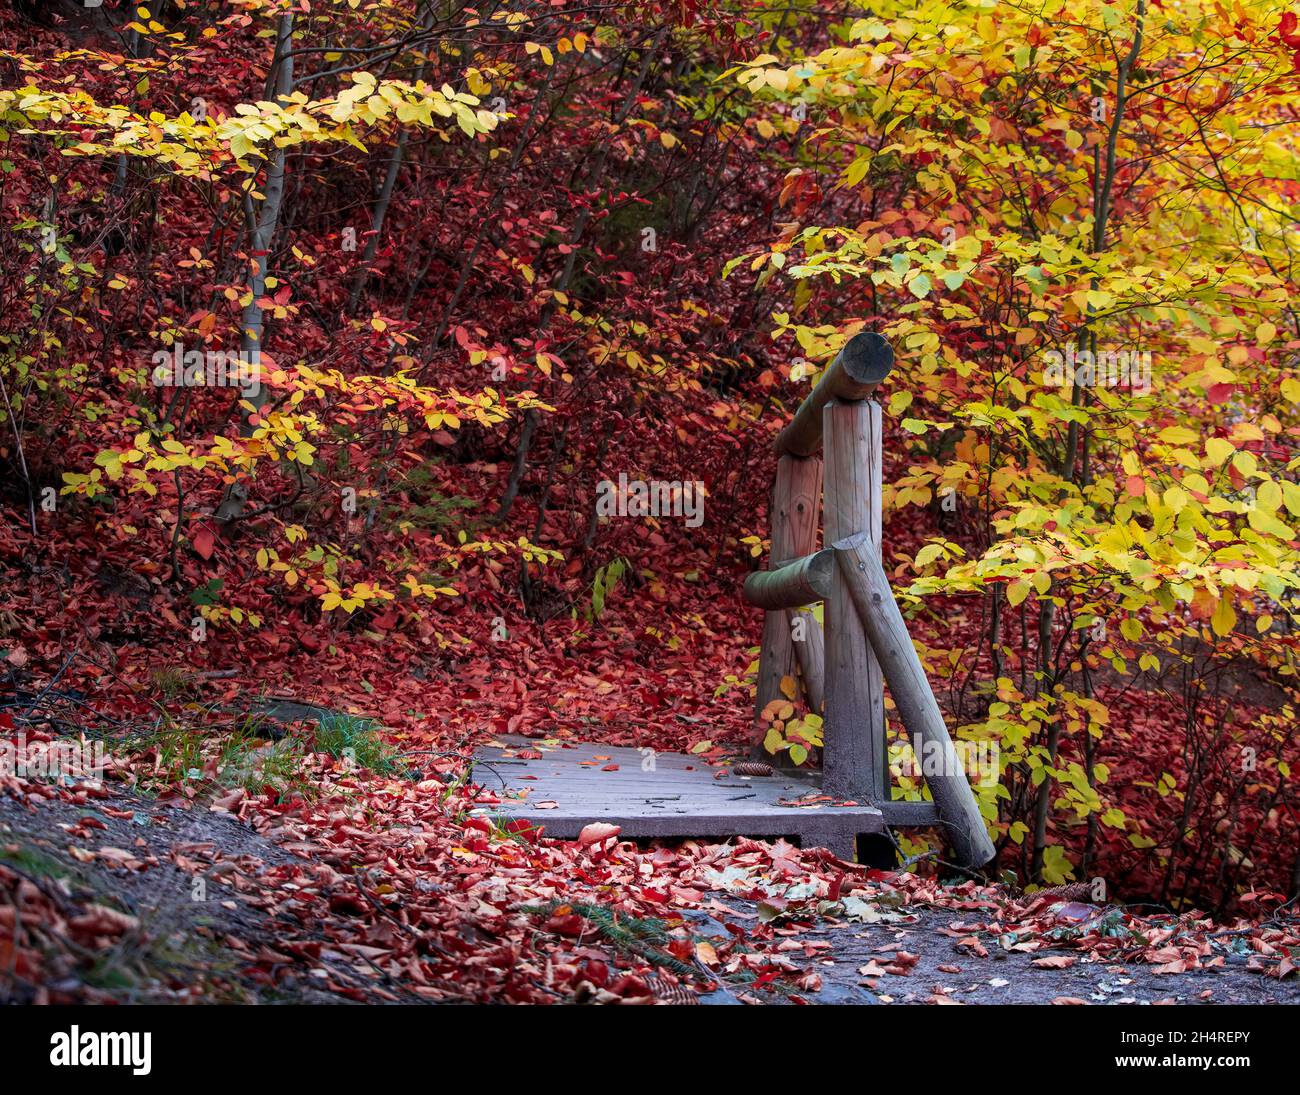 old wooden bridge in colourful autumn forest scene Stock Photo